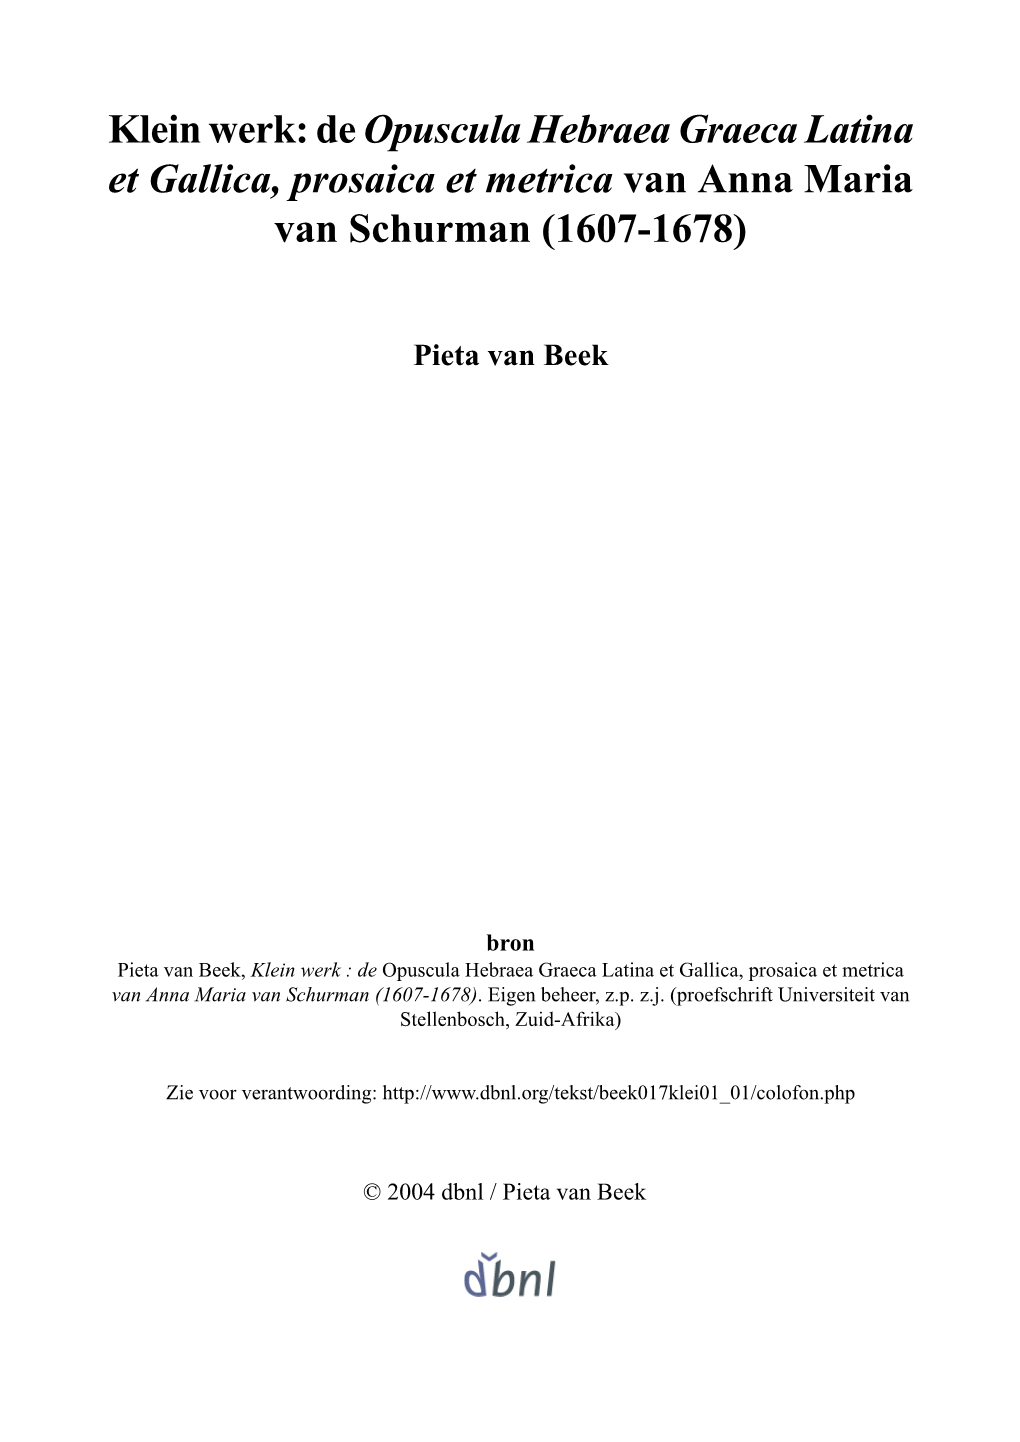 Klein Werk: De Opuscula Hebraea Graeca Latina Et Gallica, Prosaica Et Metrica Van Anna Maria Van Schurman (1607-1678)